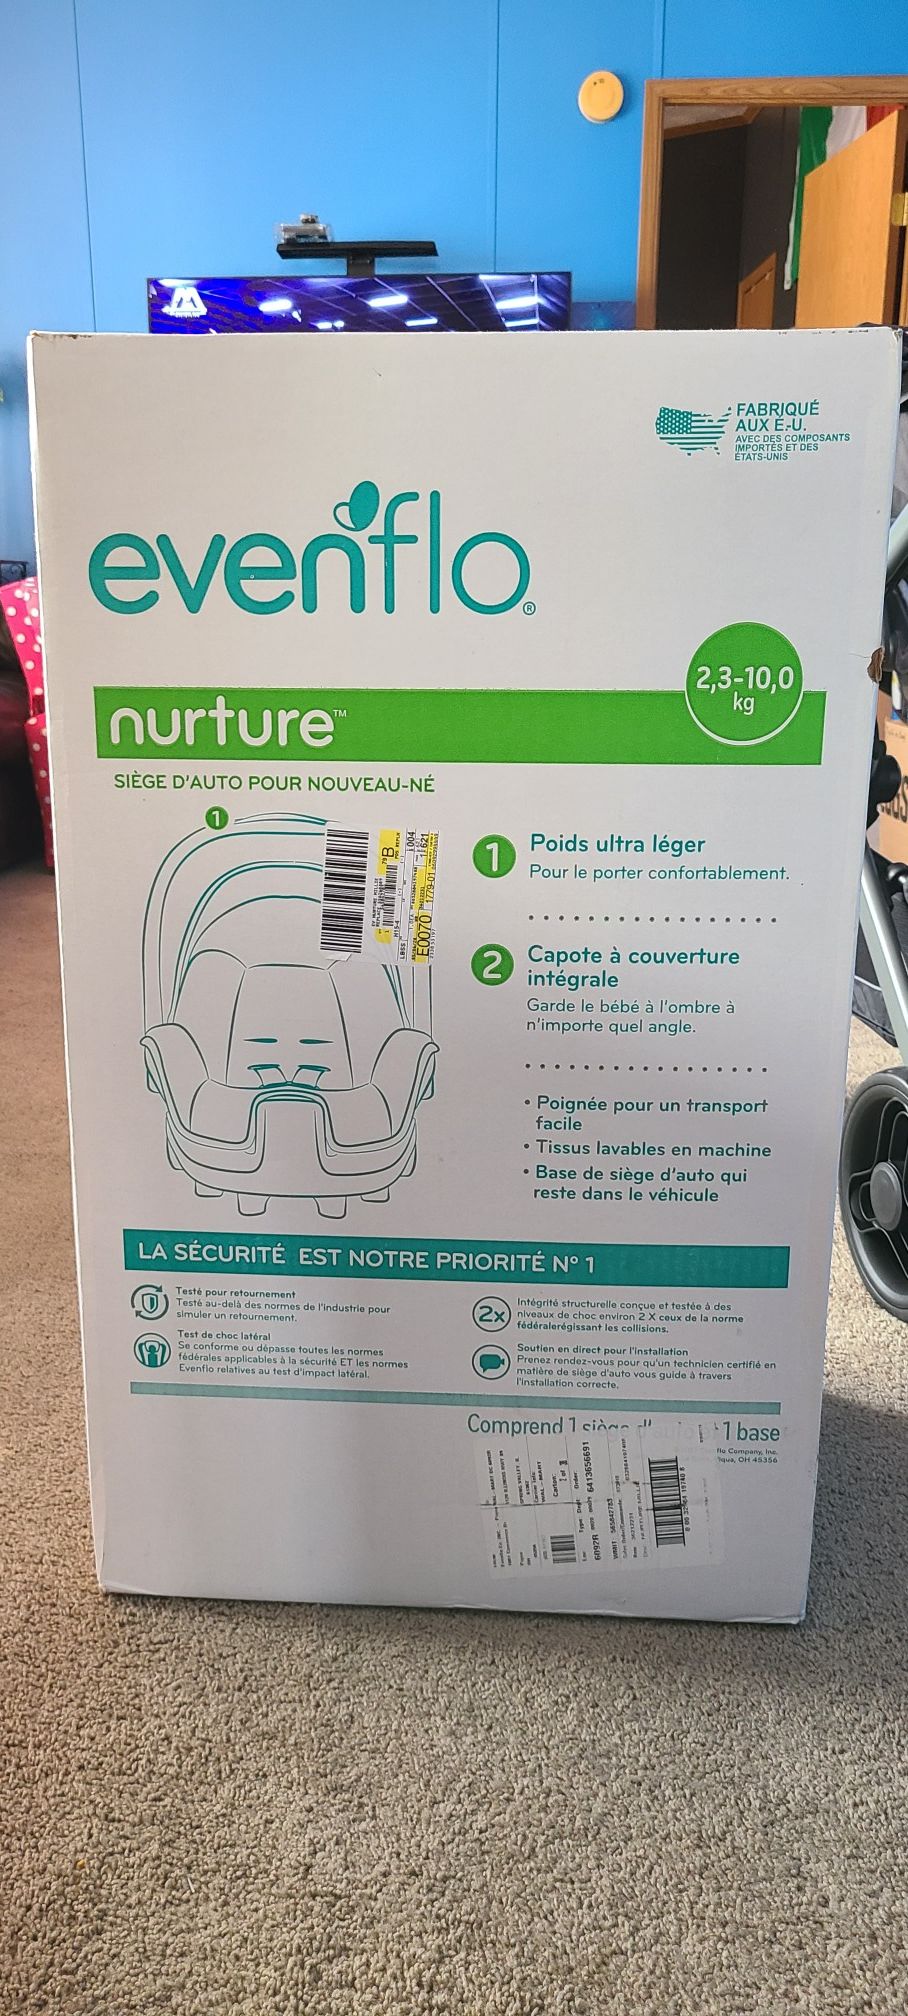 Evemflo, car seat